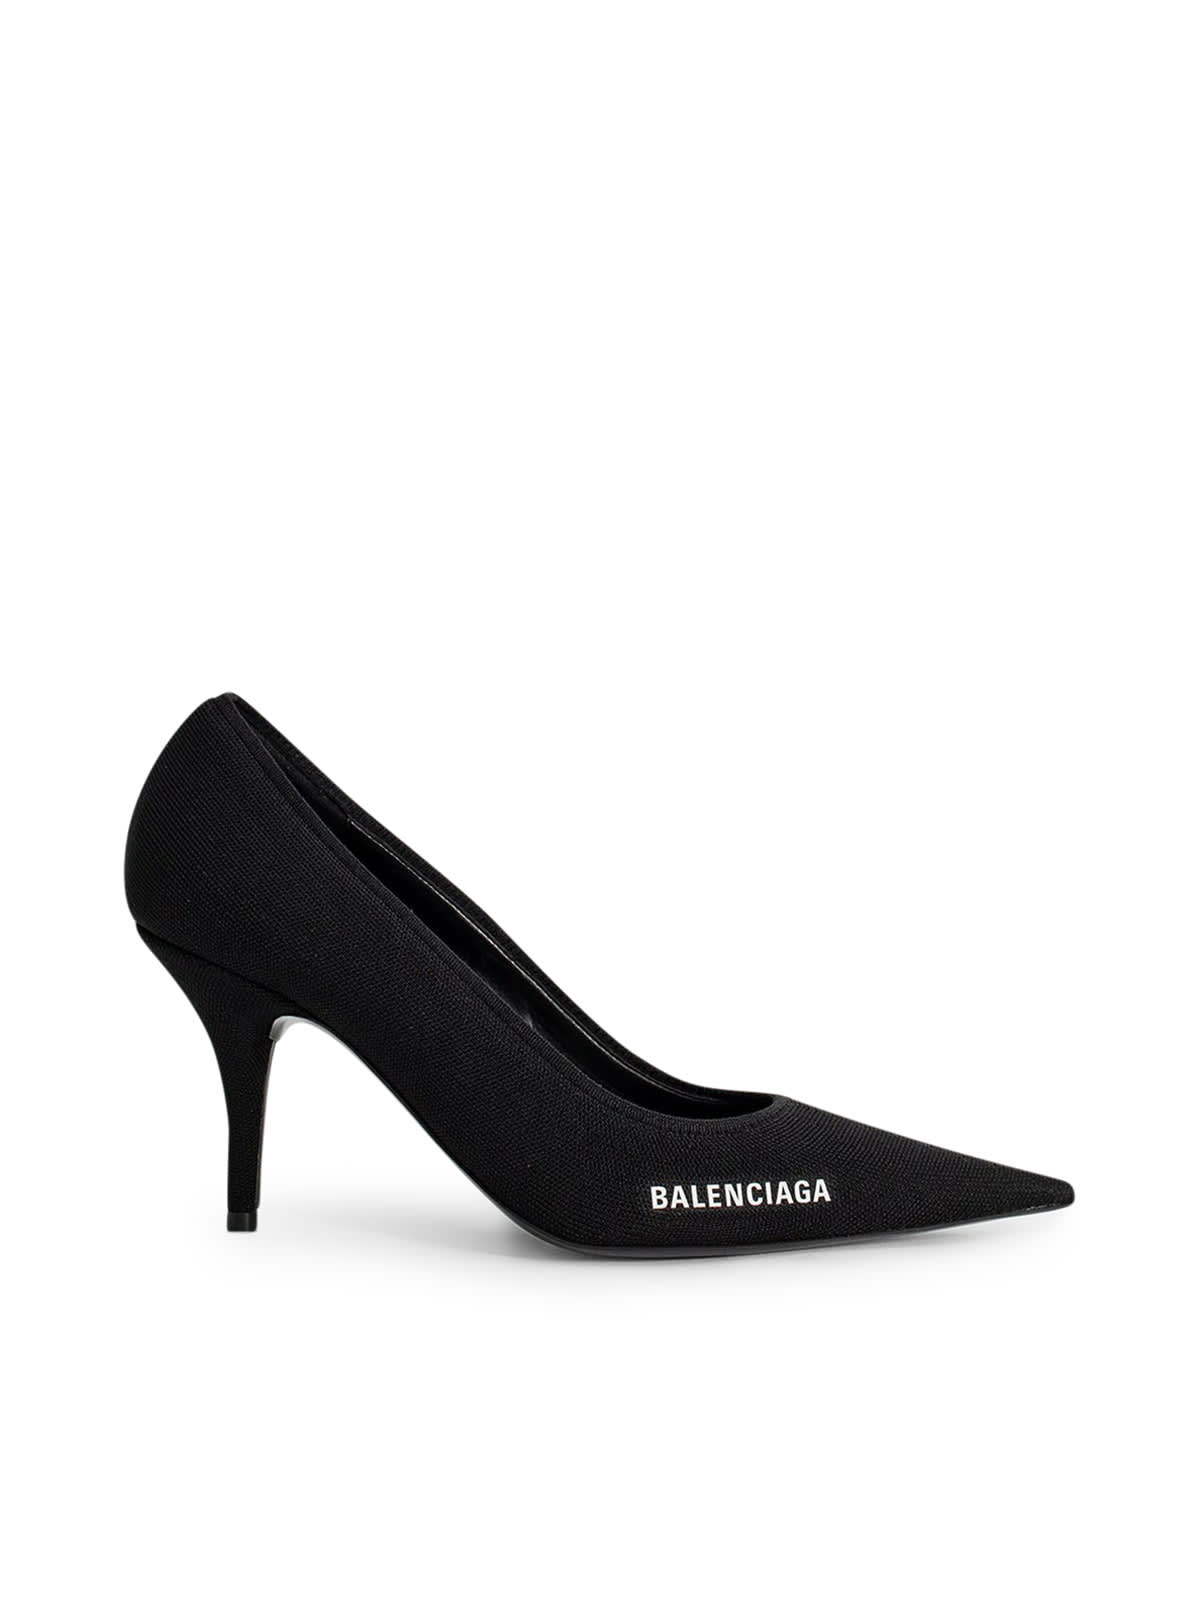 Buy Balenciaga Recicled Knit Logo Pump M80 online, shop Balenciaga shoes with free shipping